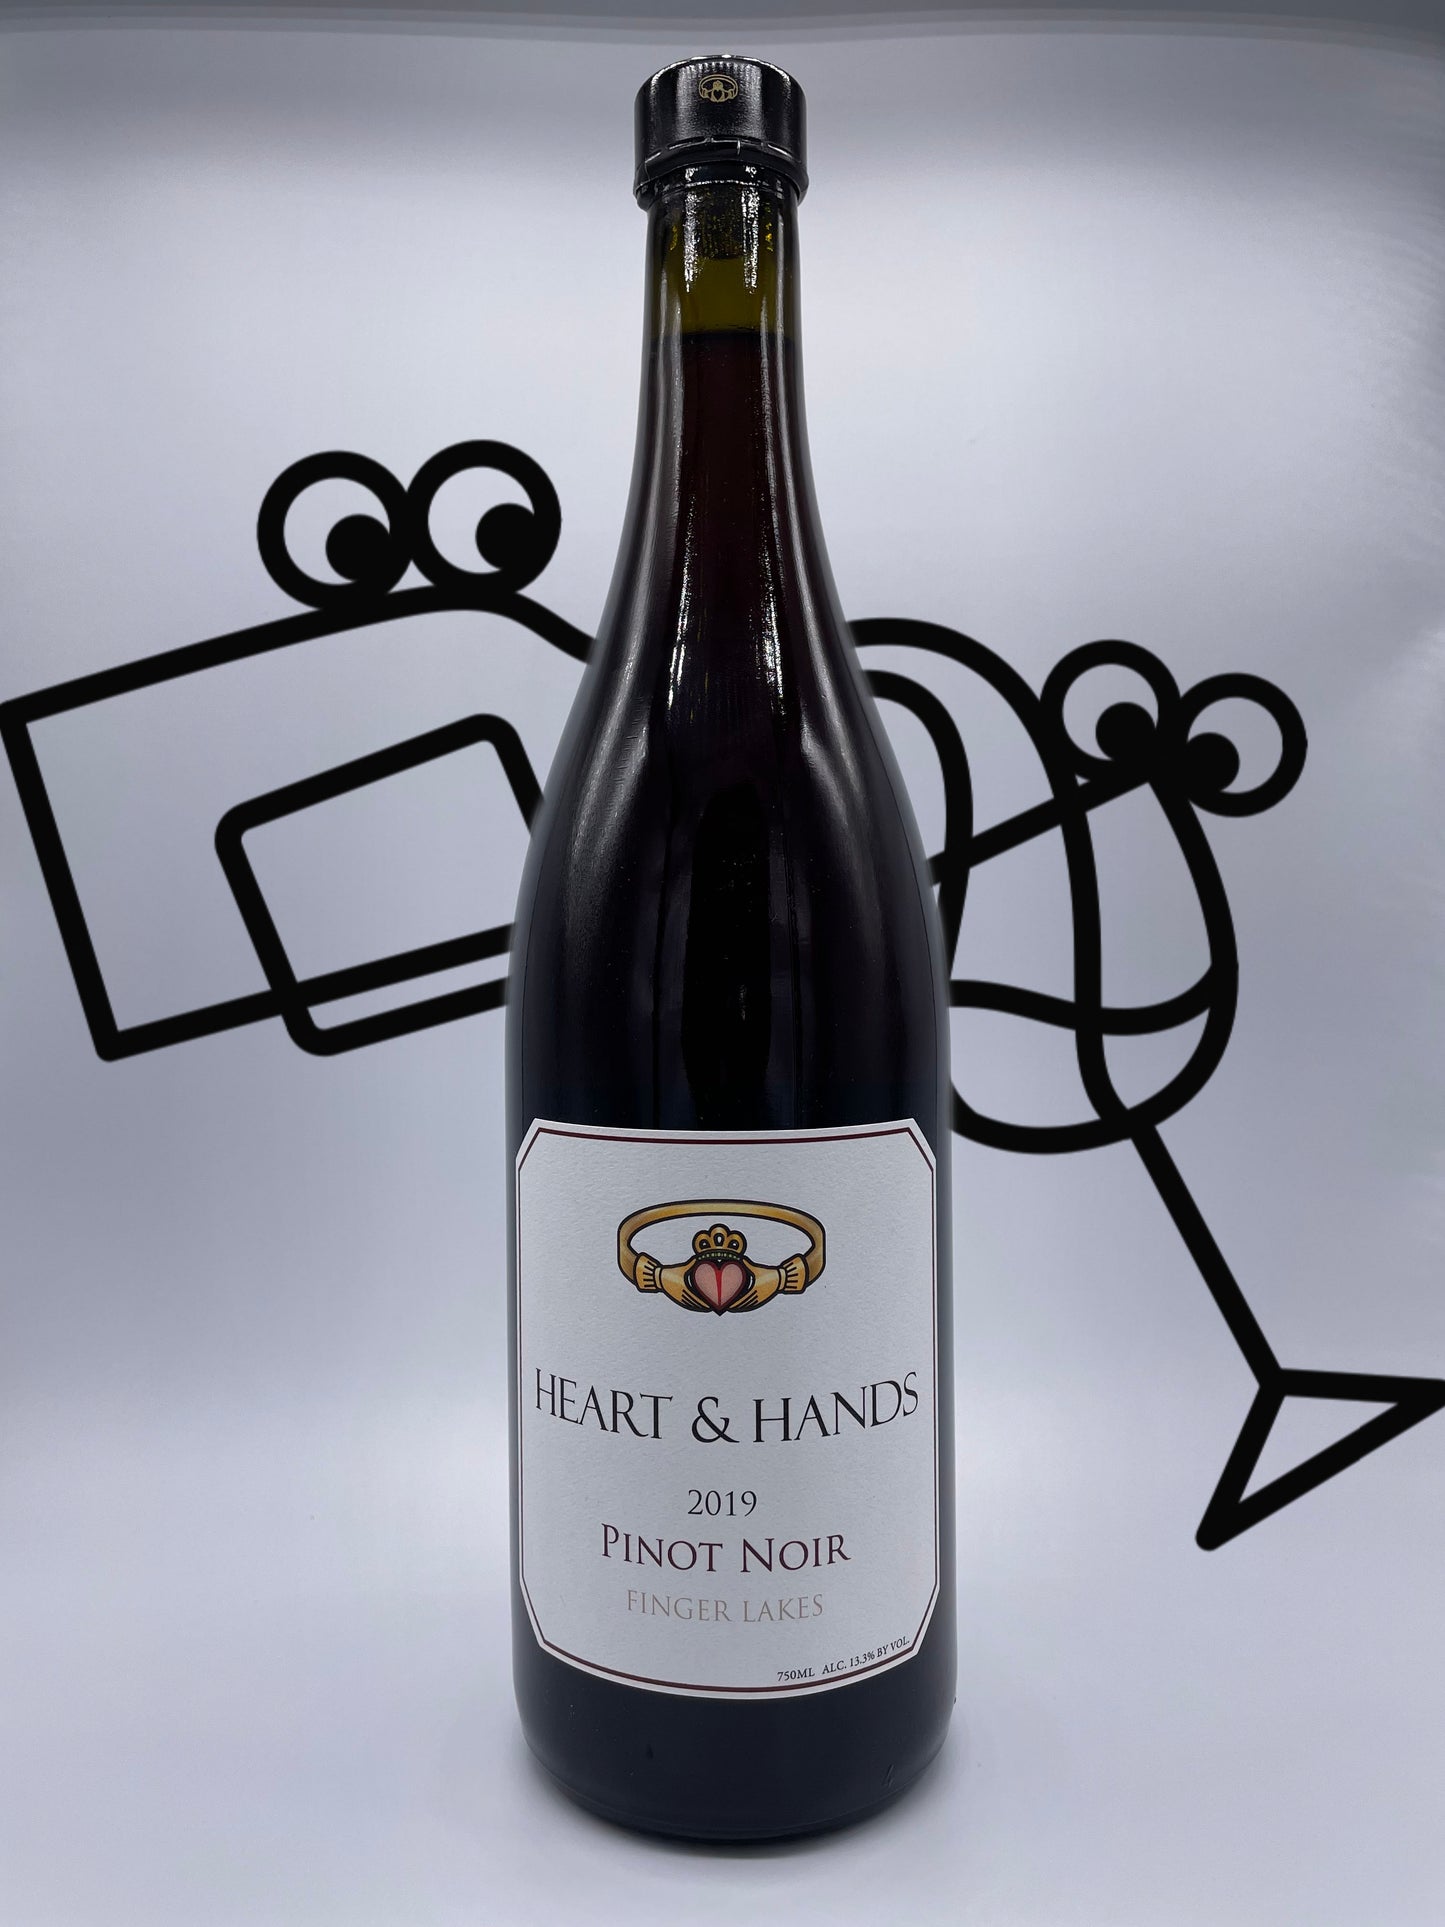 Heart & Hands Pinot Noir Finger Lakes New York Williston Park Wines